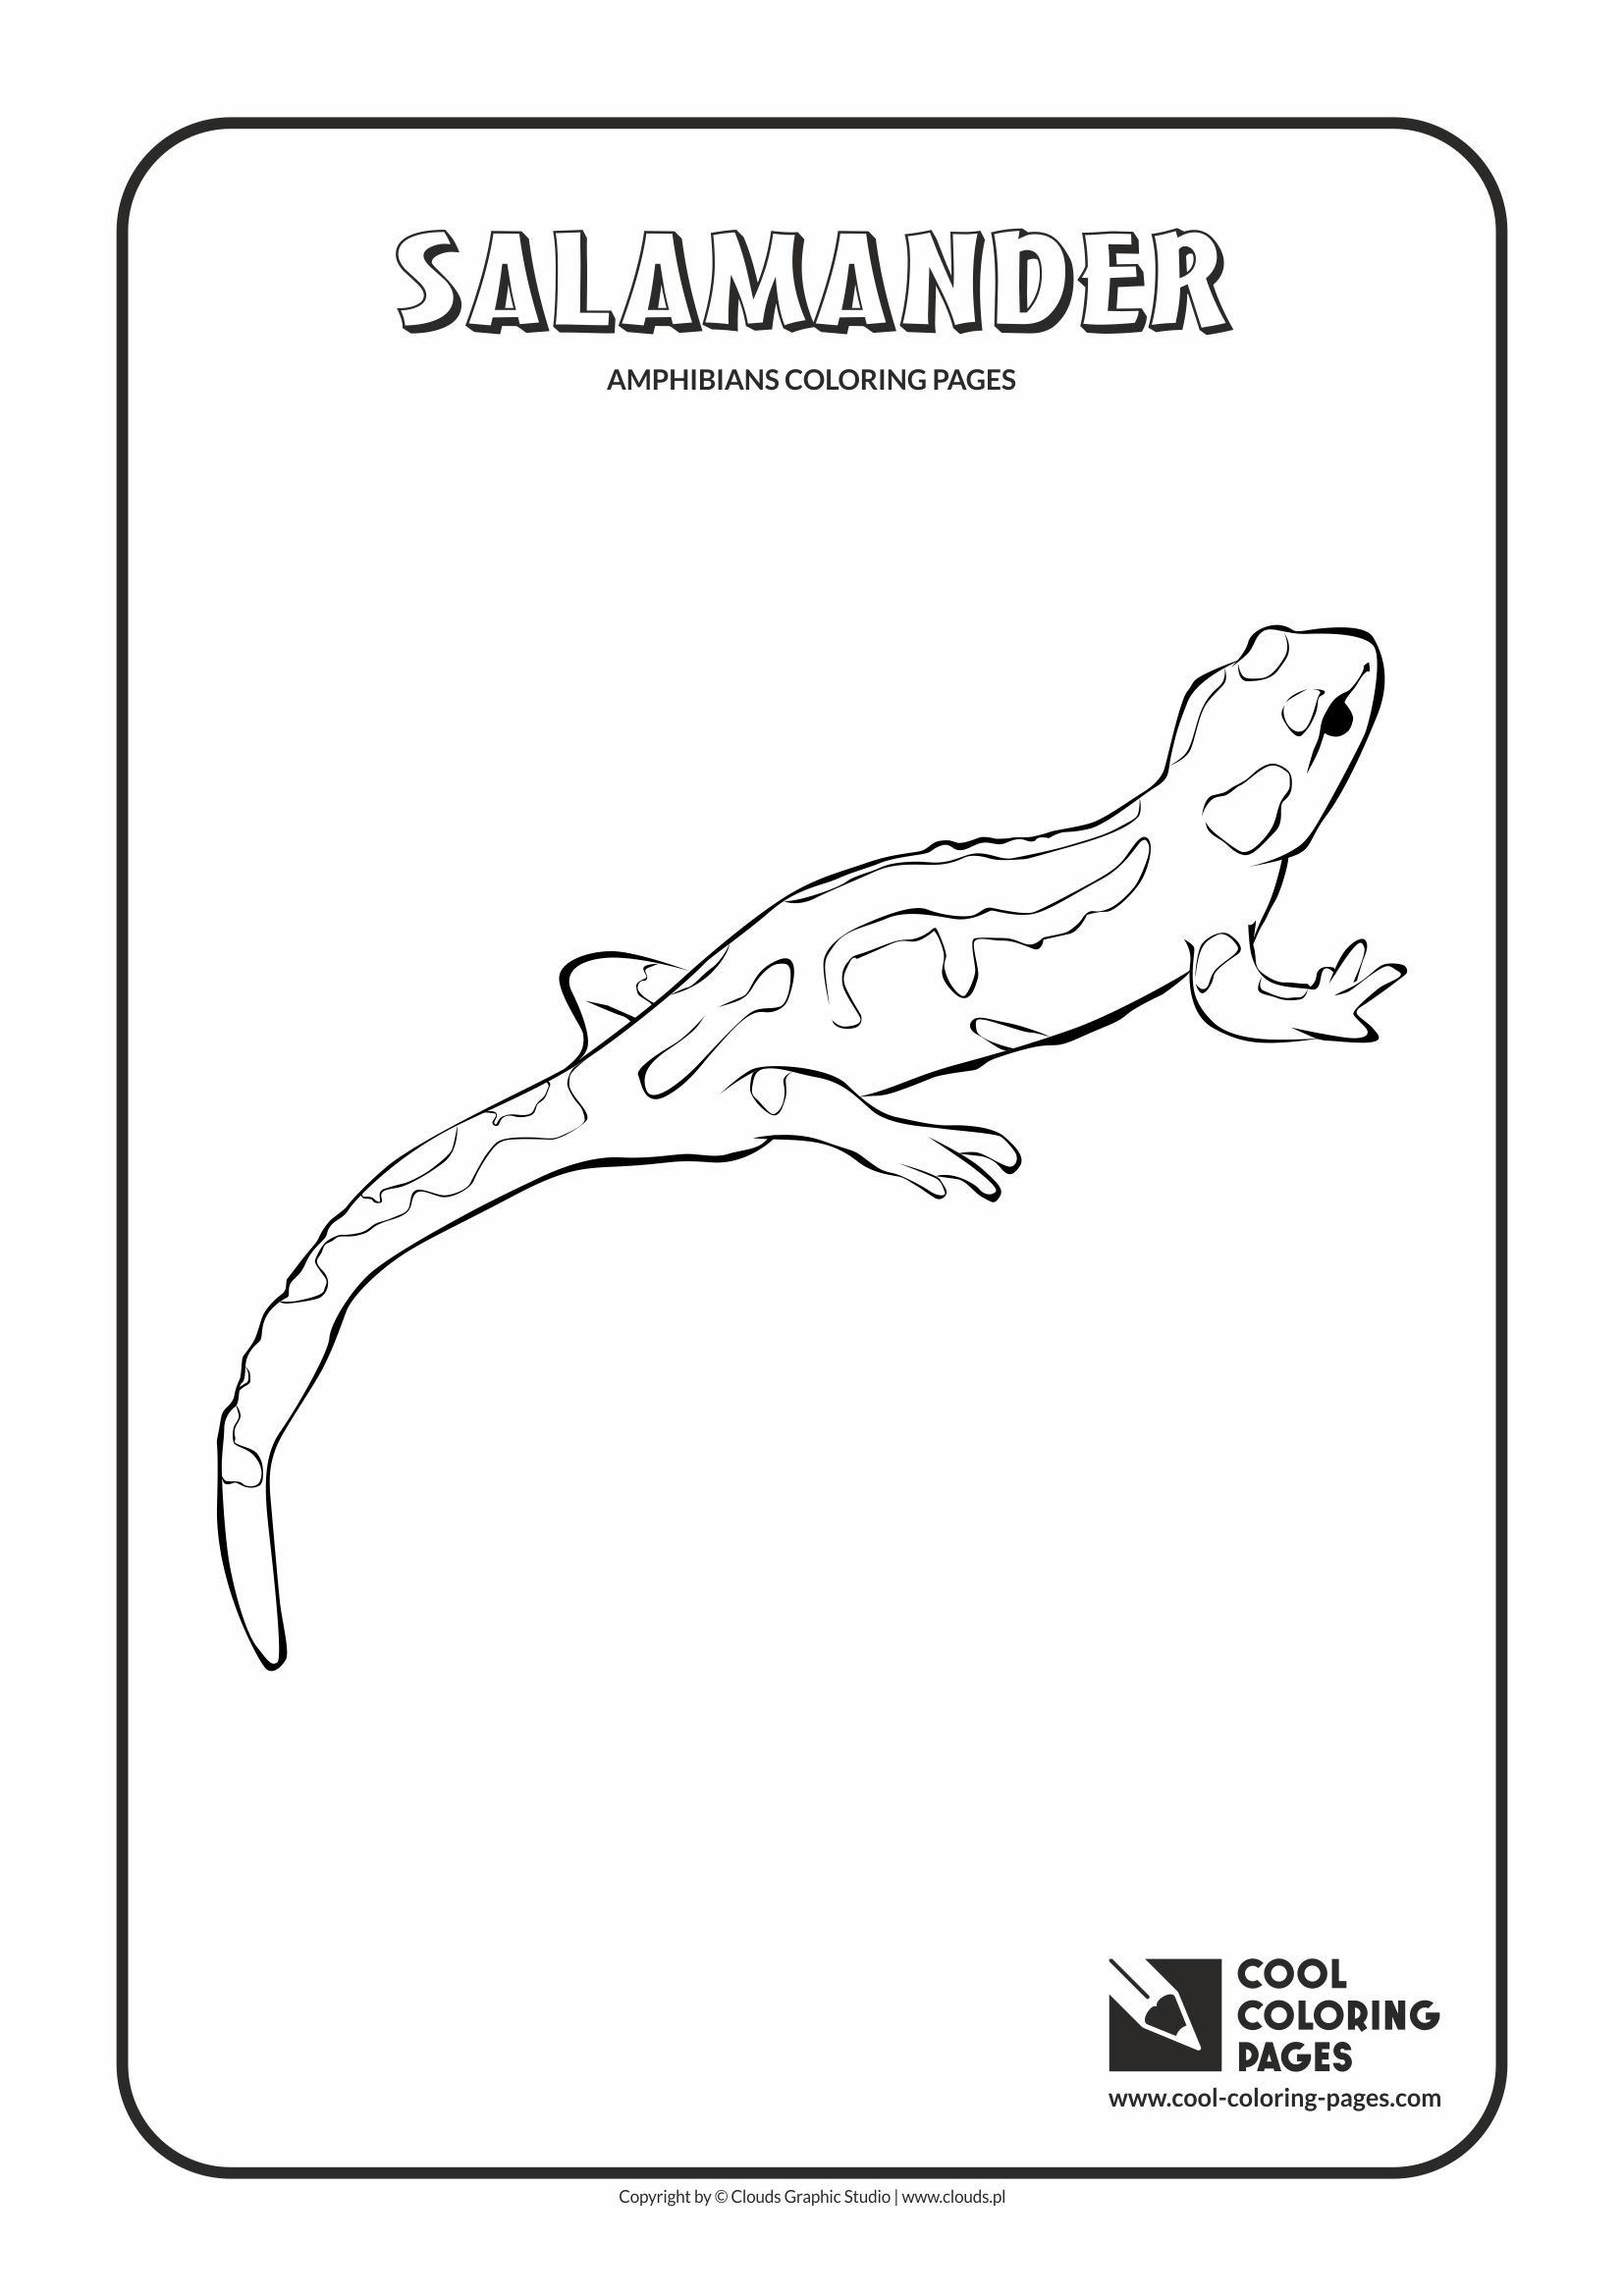 Cool Coloring Pages - Animals / Salamander / Coloring page with salamander